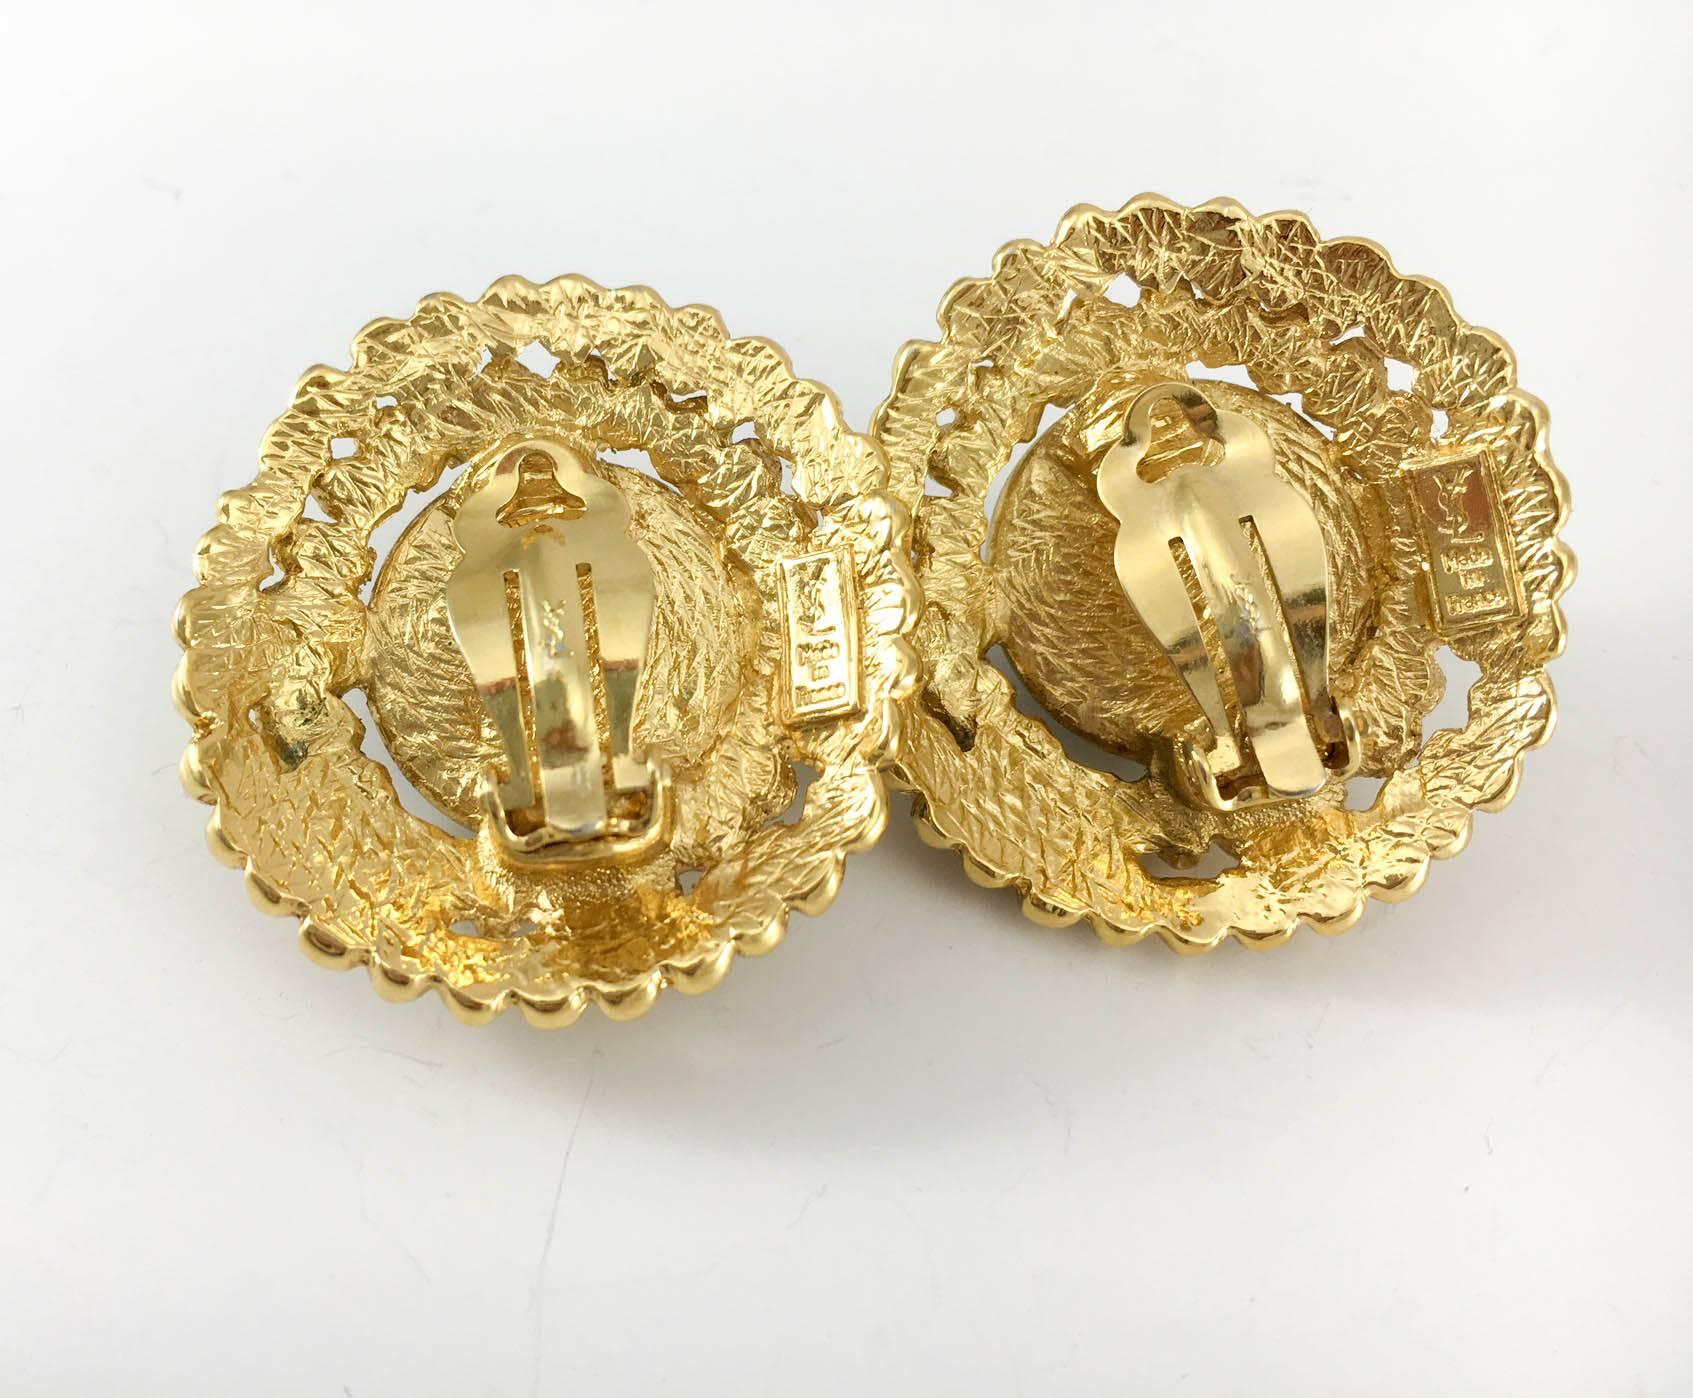 Yves Saint Laurent Green Gripoix Gold-Plated Earrings, by Goossens - 1980s 2